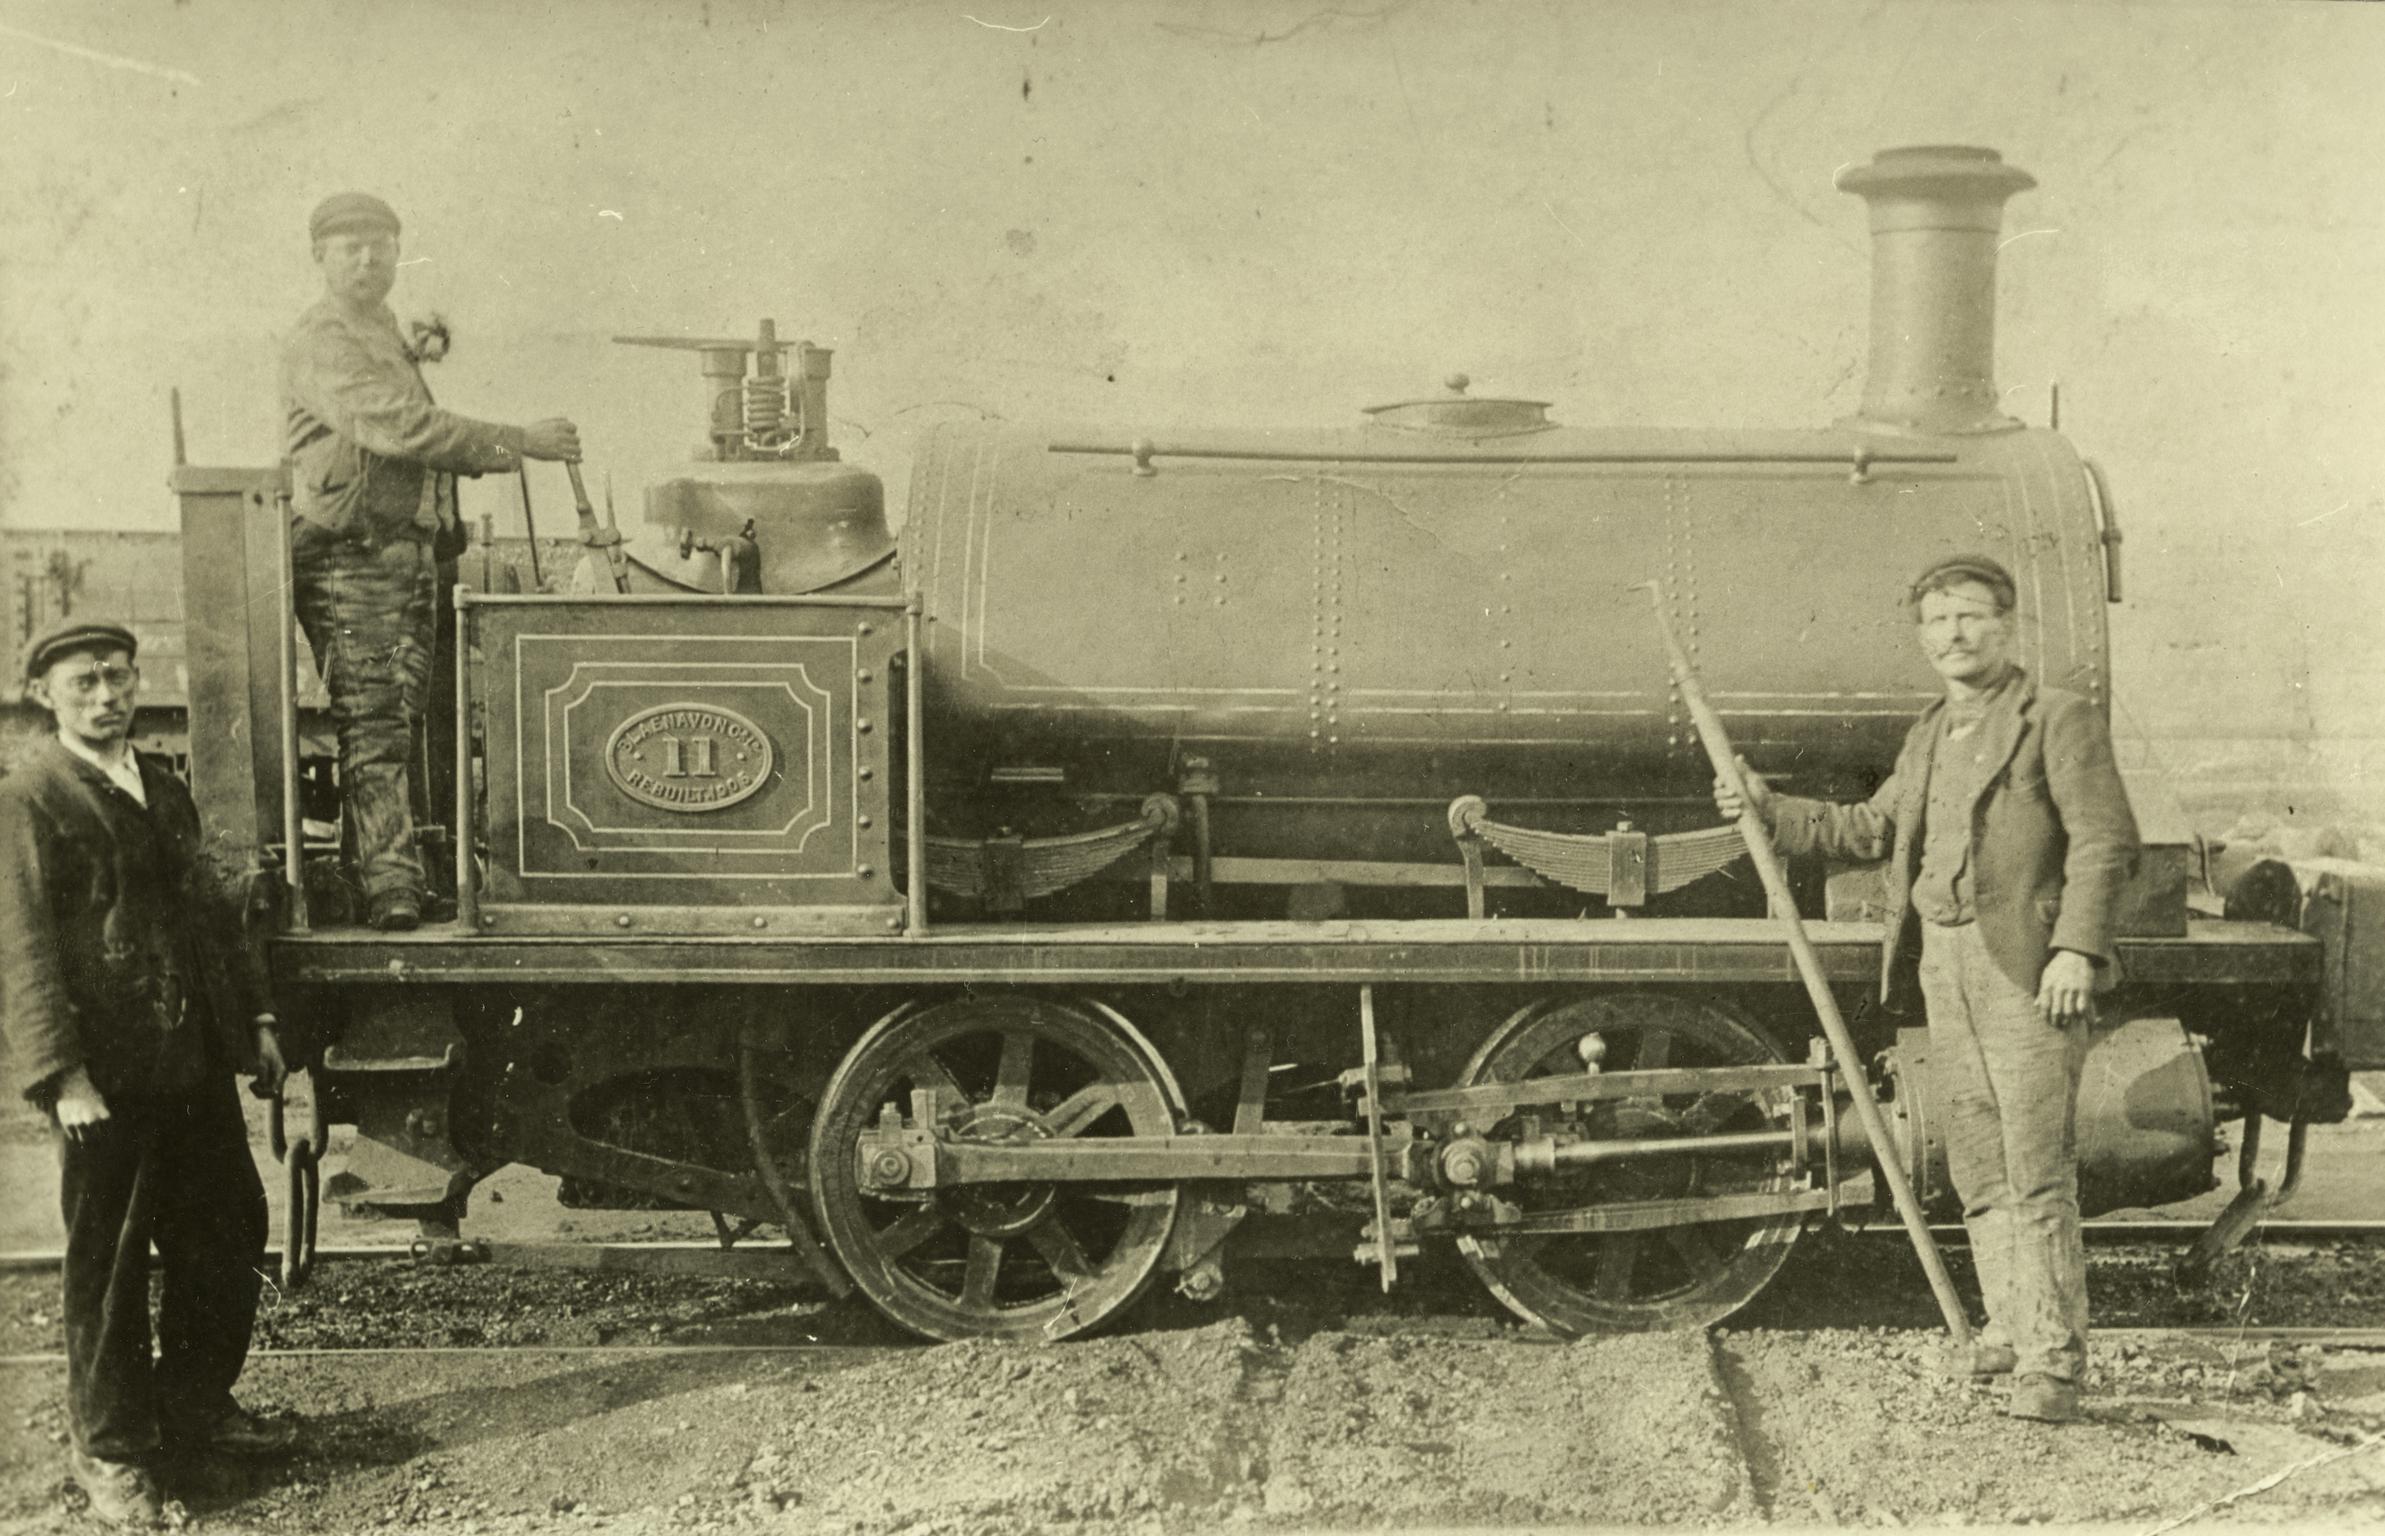 Blaenavon locomotive, photograph